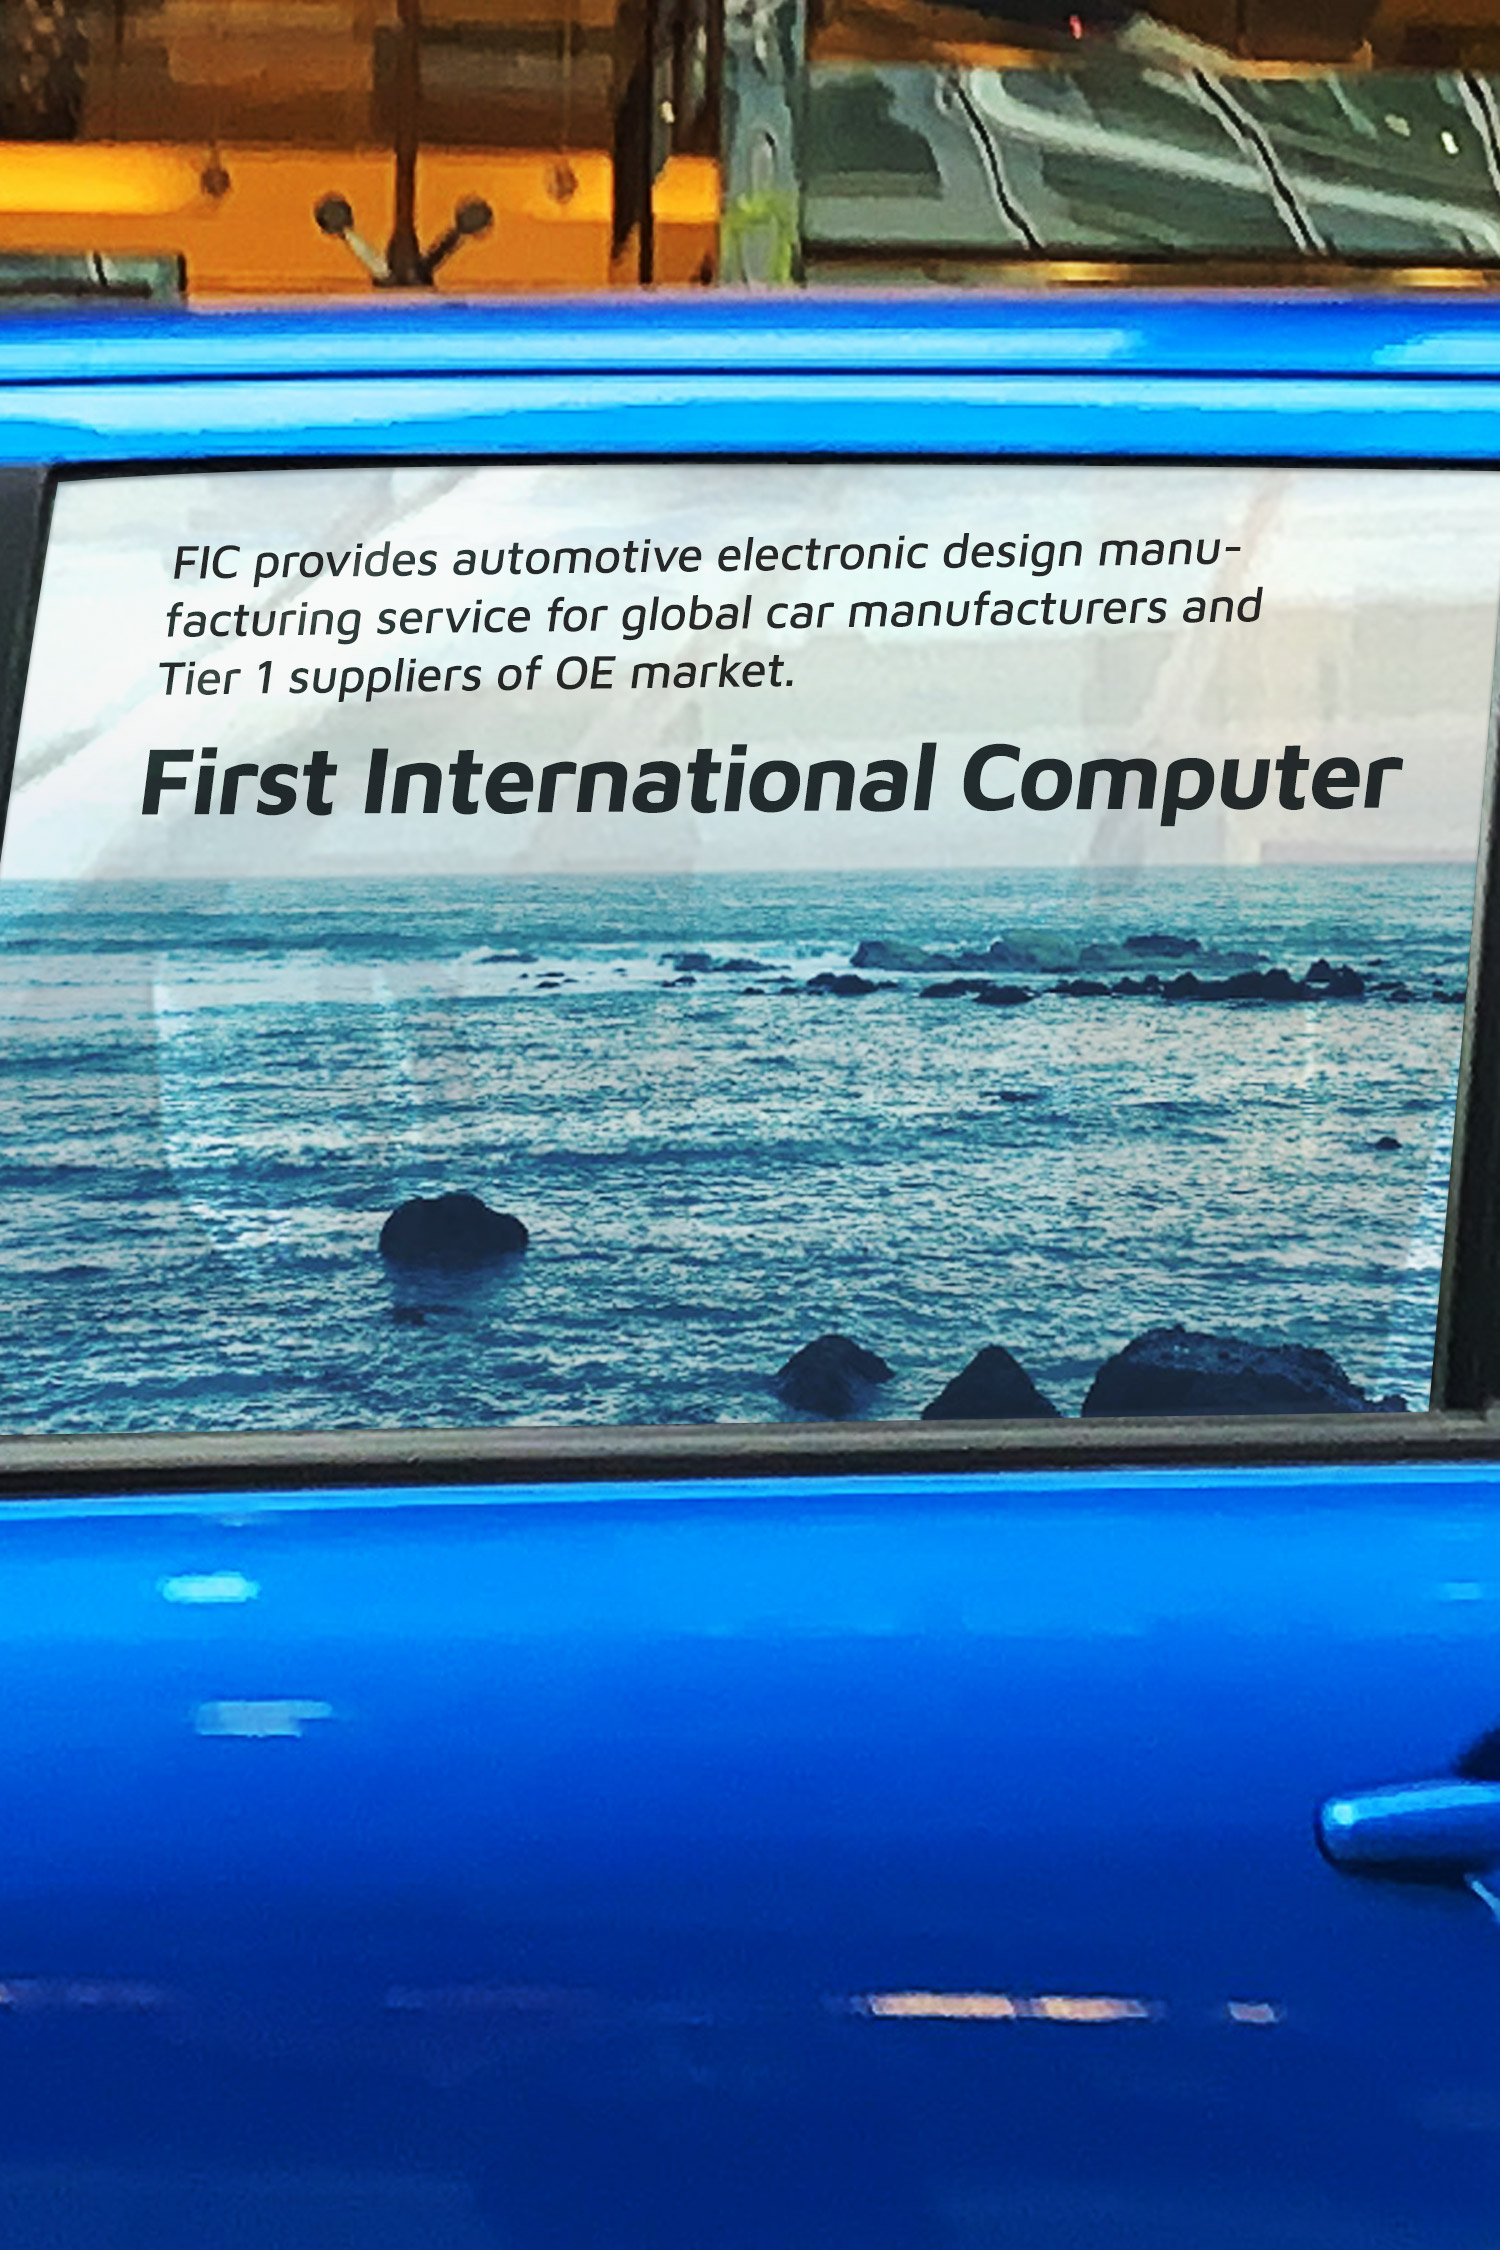 FIC ADD 多媒体显像系统带来新型态的车辆广告